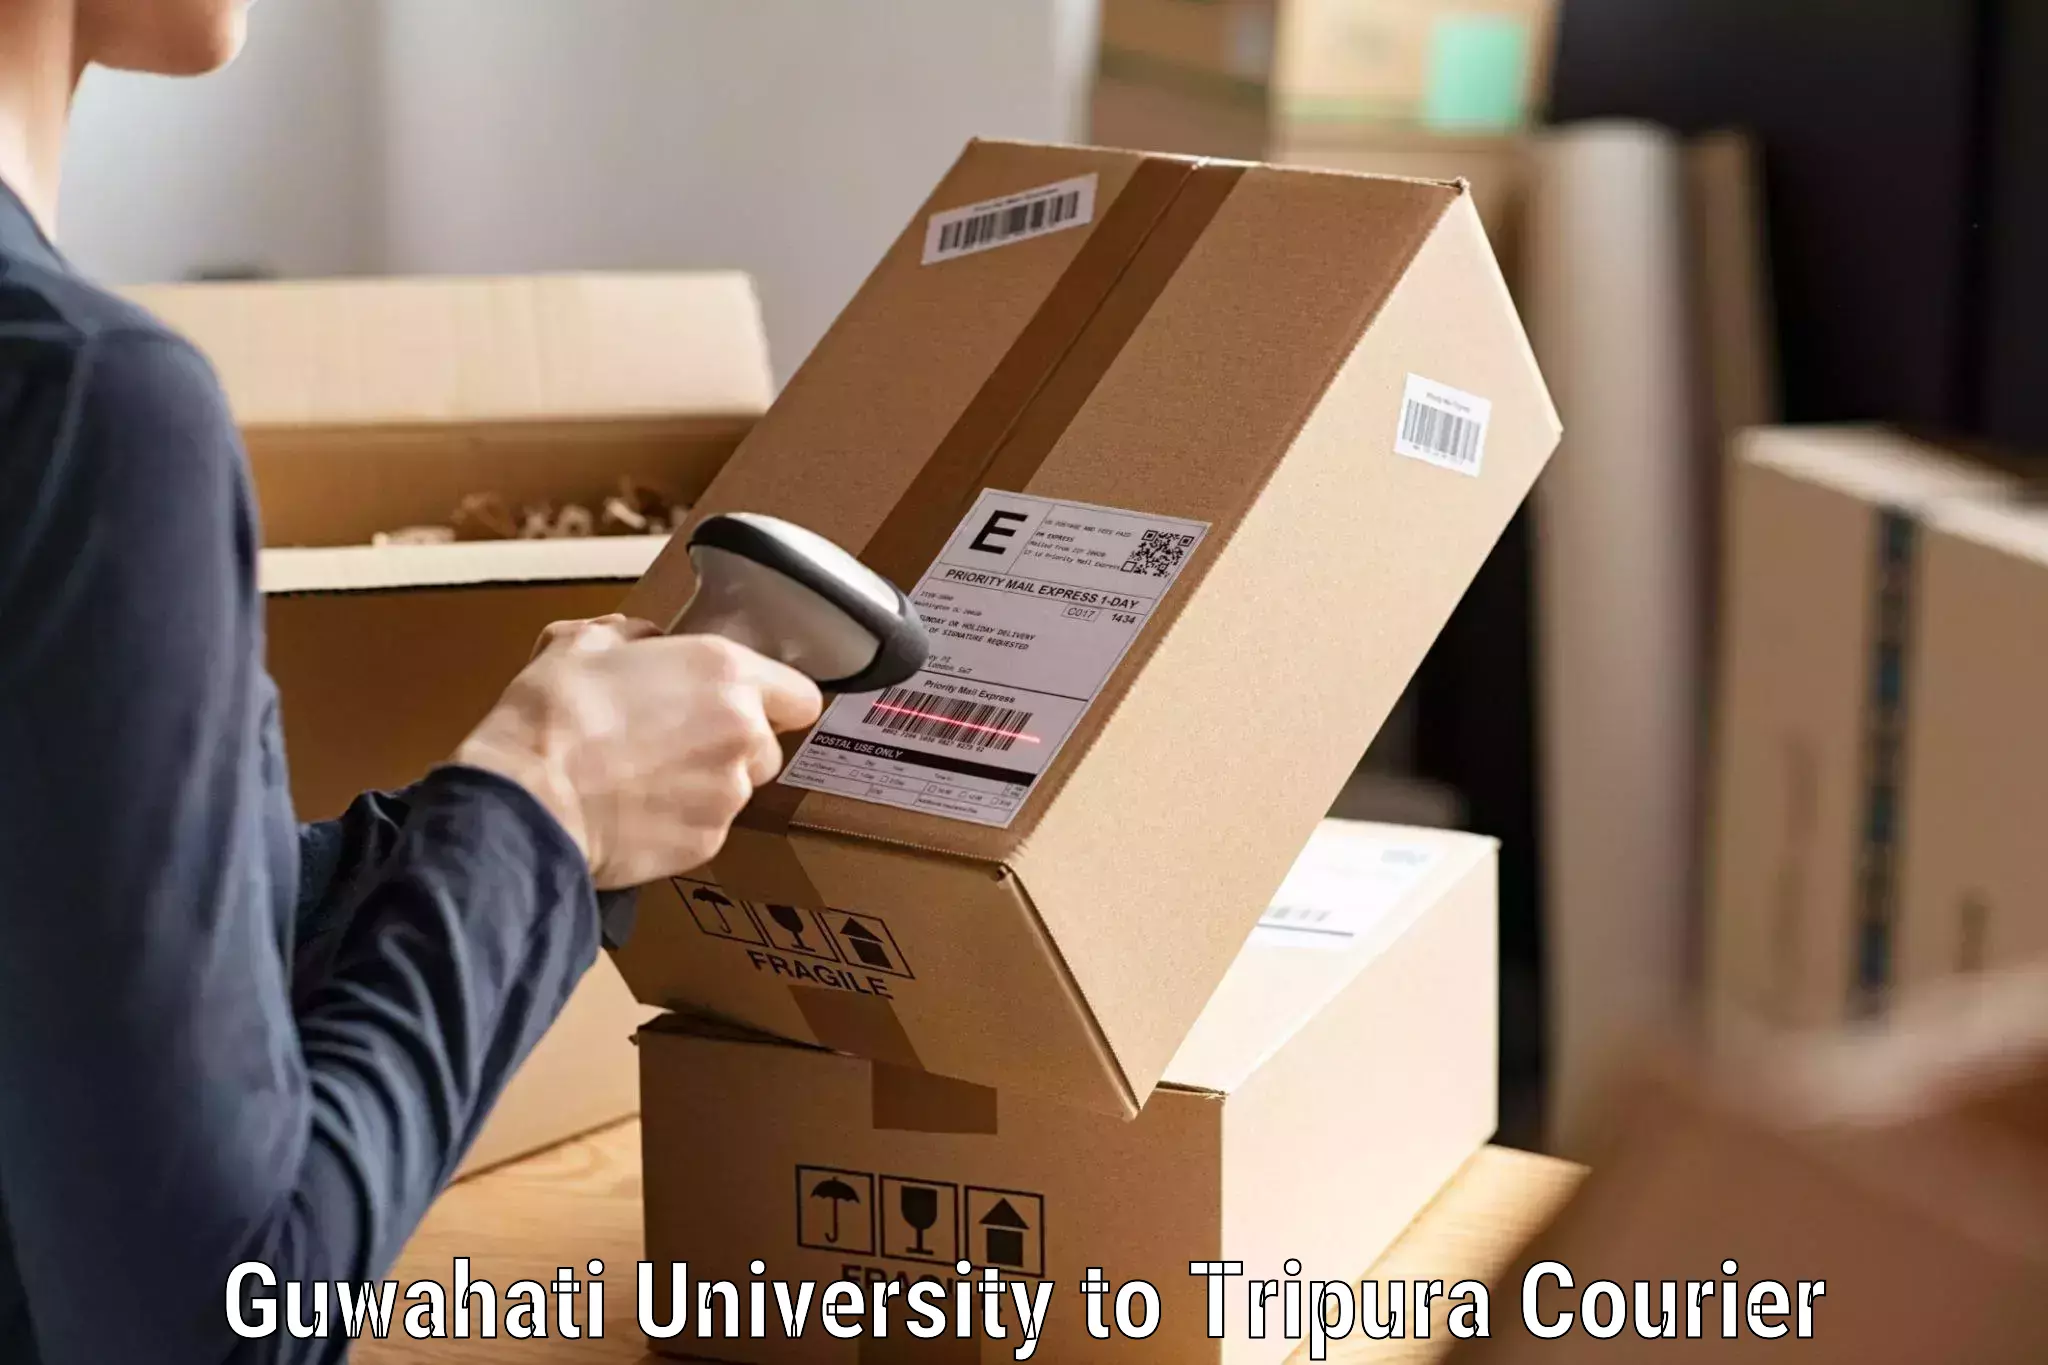 Courier service comparison Guwahati University to West Tripura